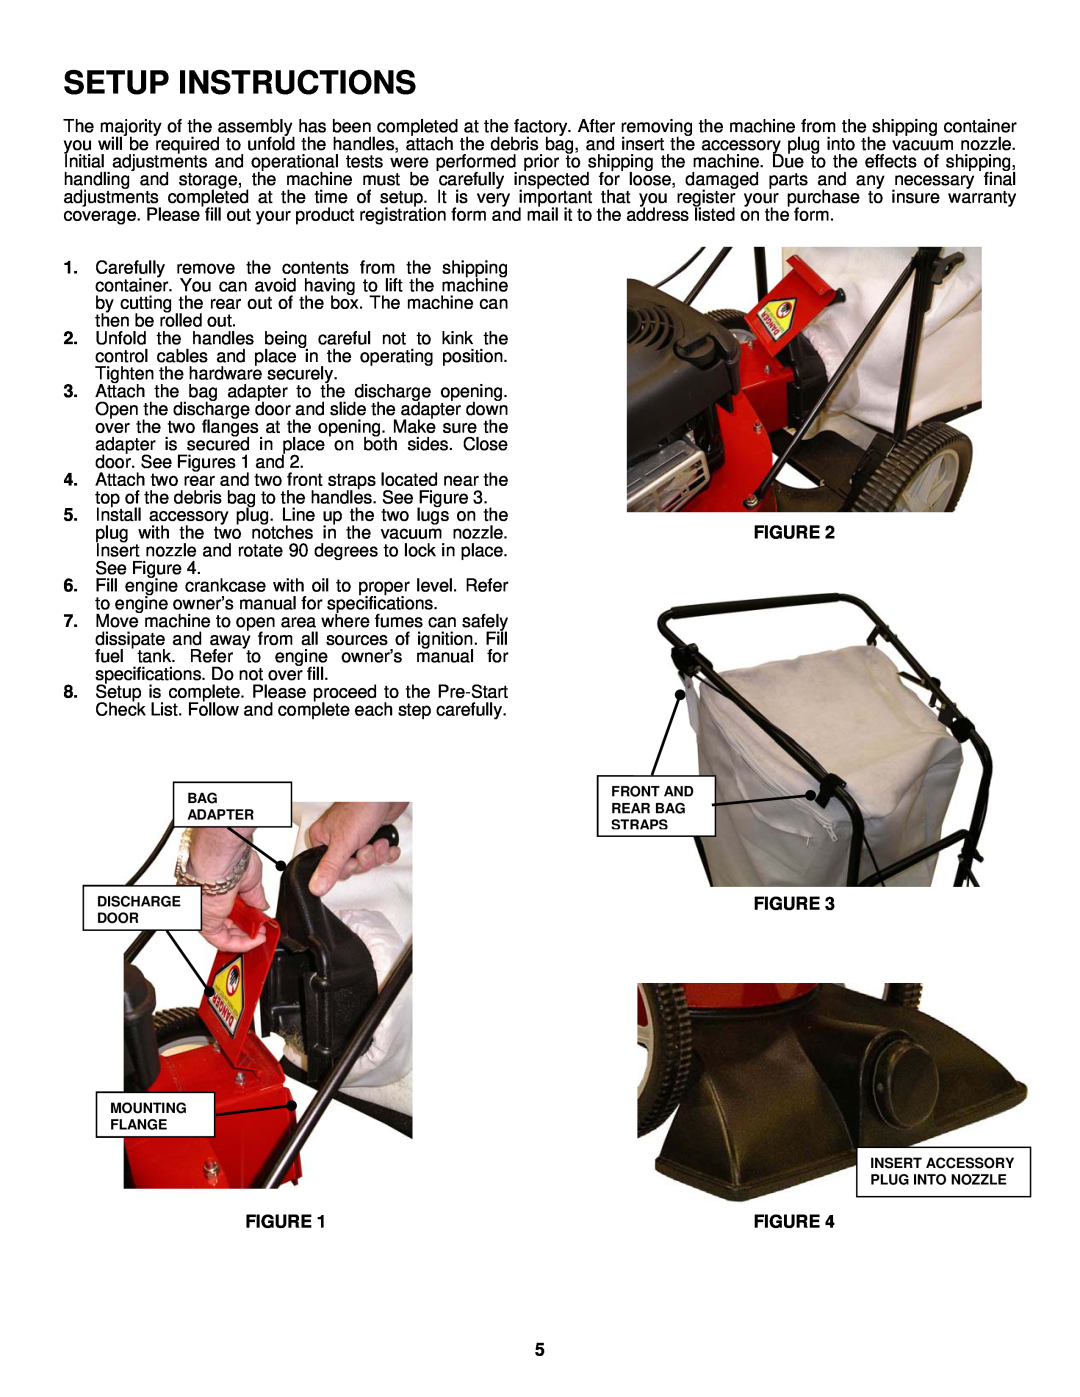 Snapper SV25650B Setup Instructions, Bag Adapter Discharge Door Mounting Flange, Front And Rear Bag Straps 